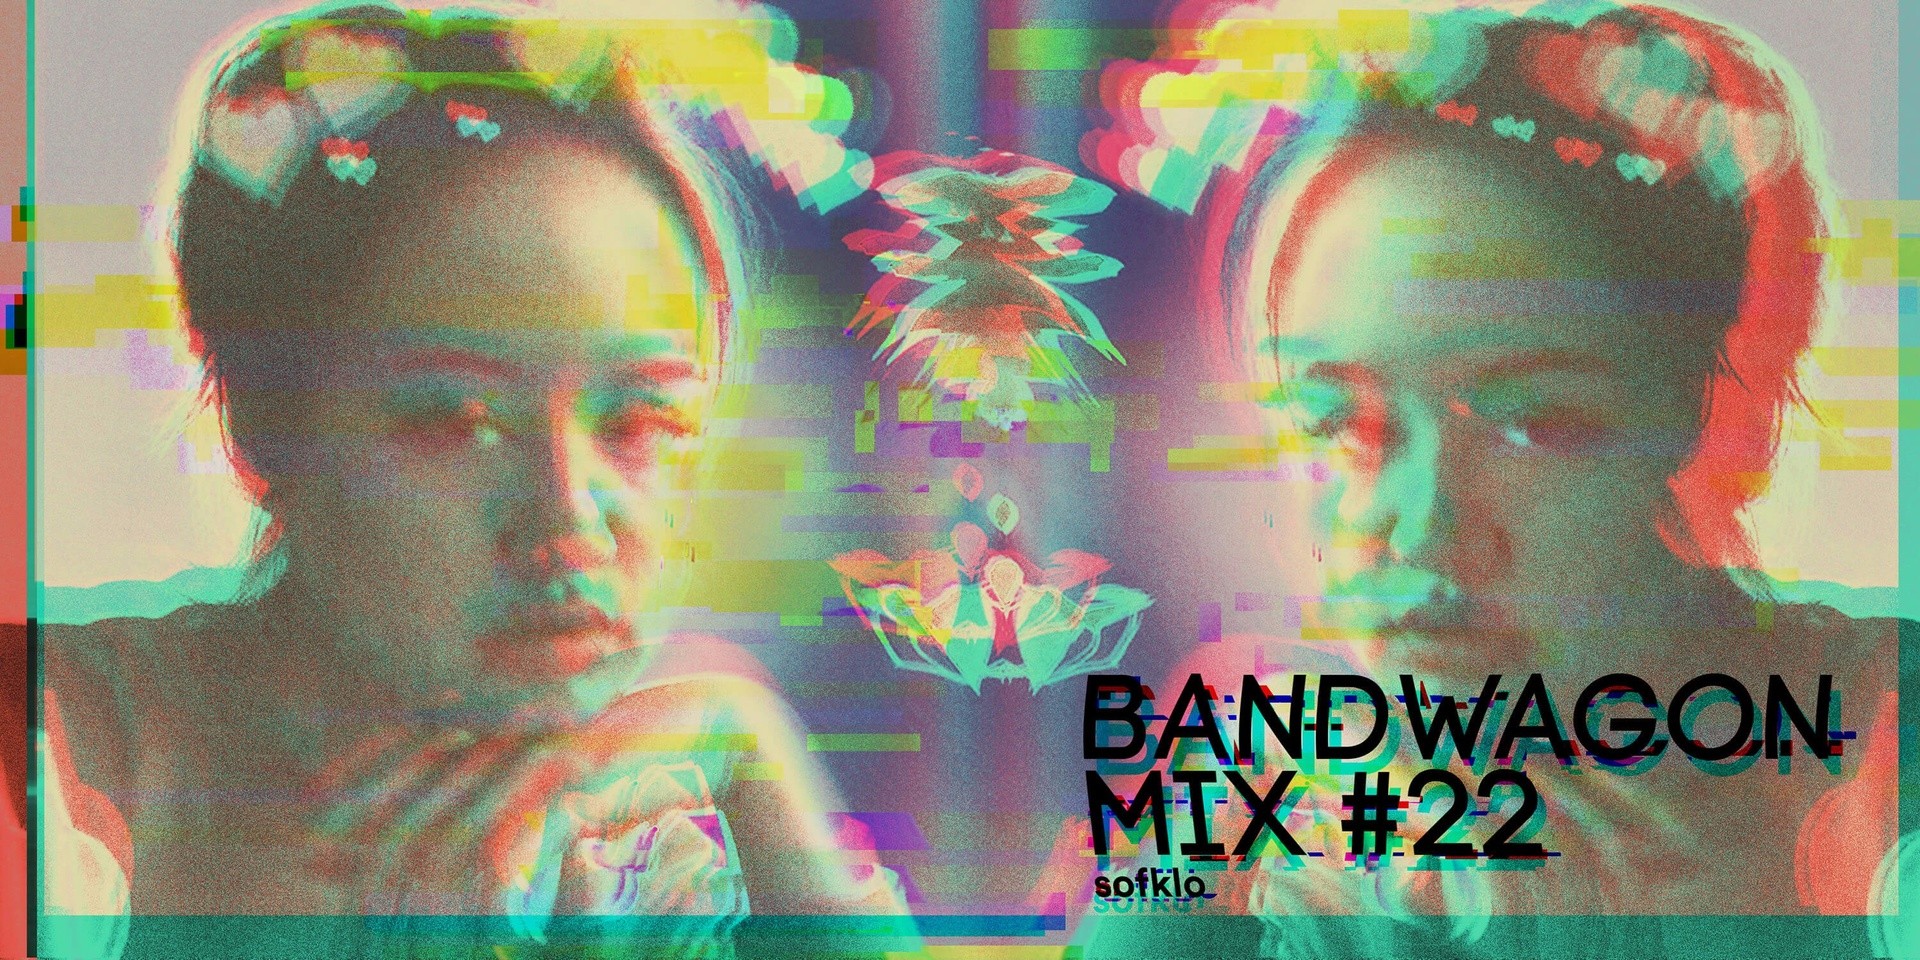 Bandwagon Mix #22: sofklo